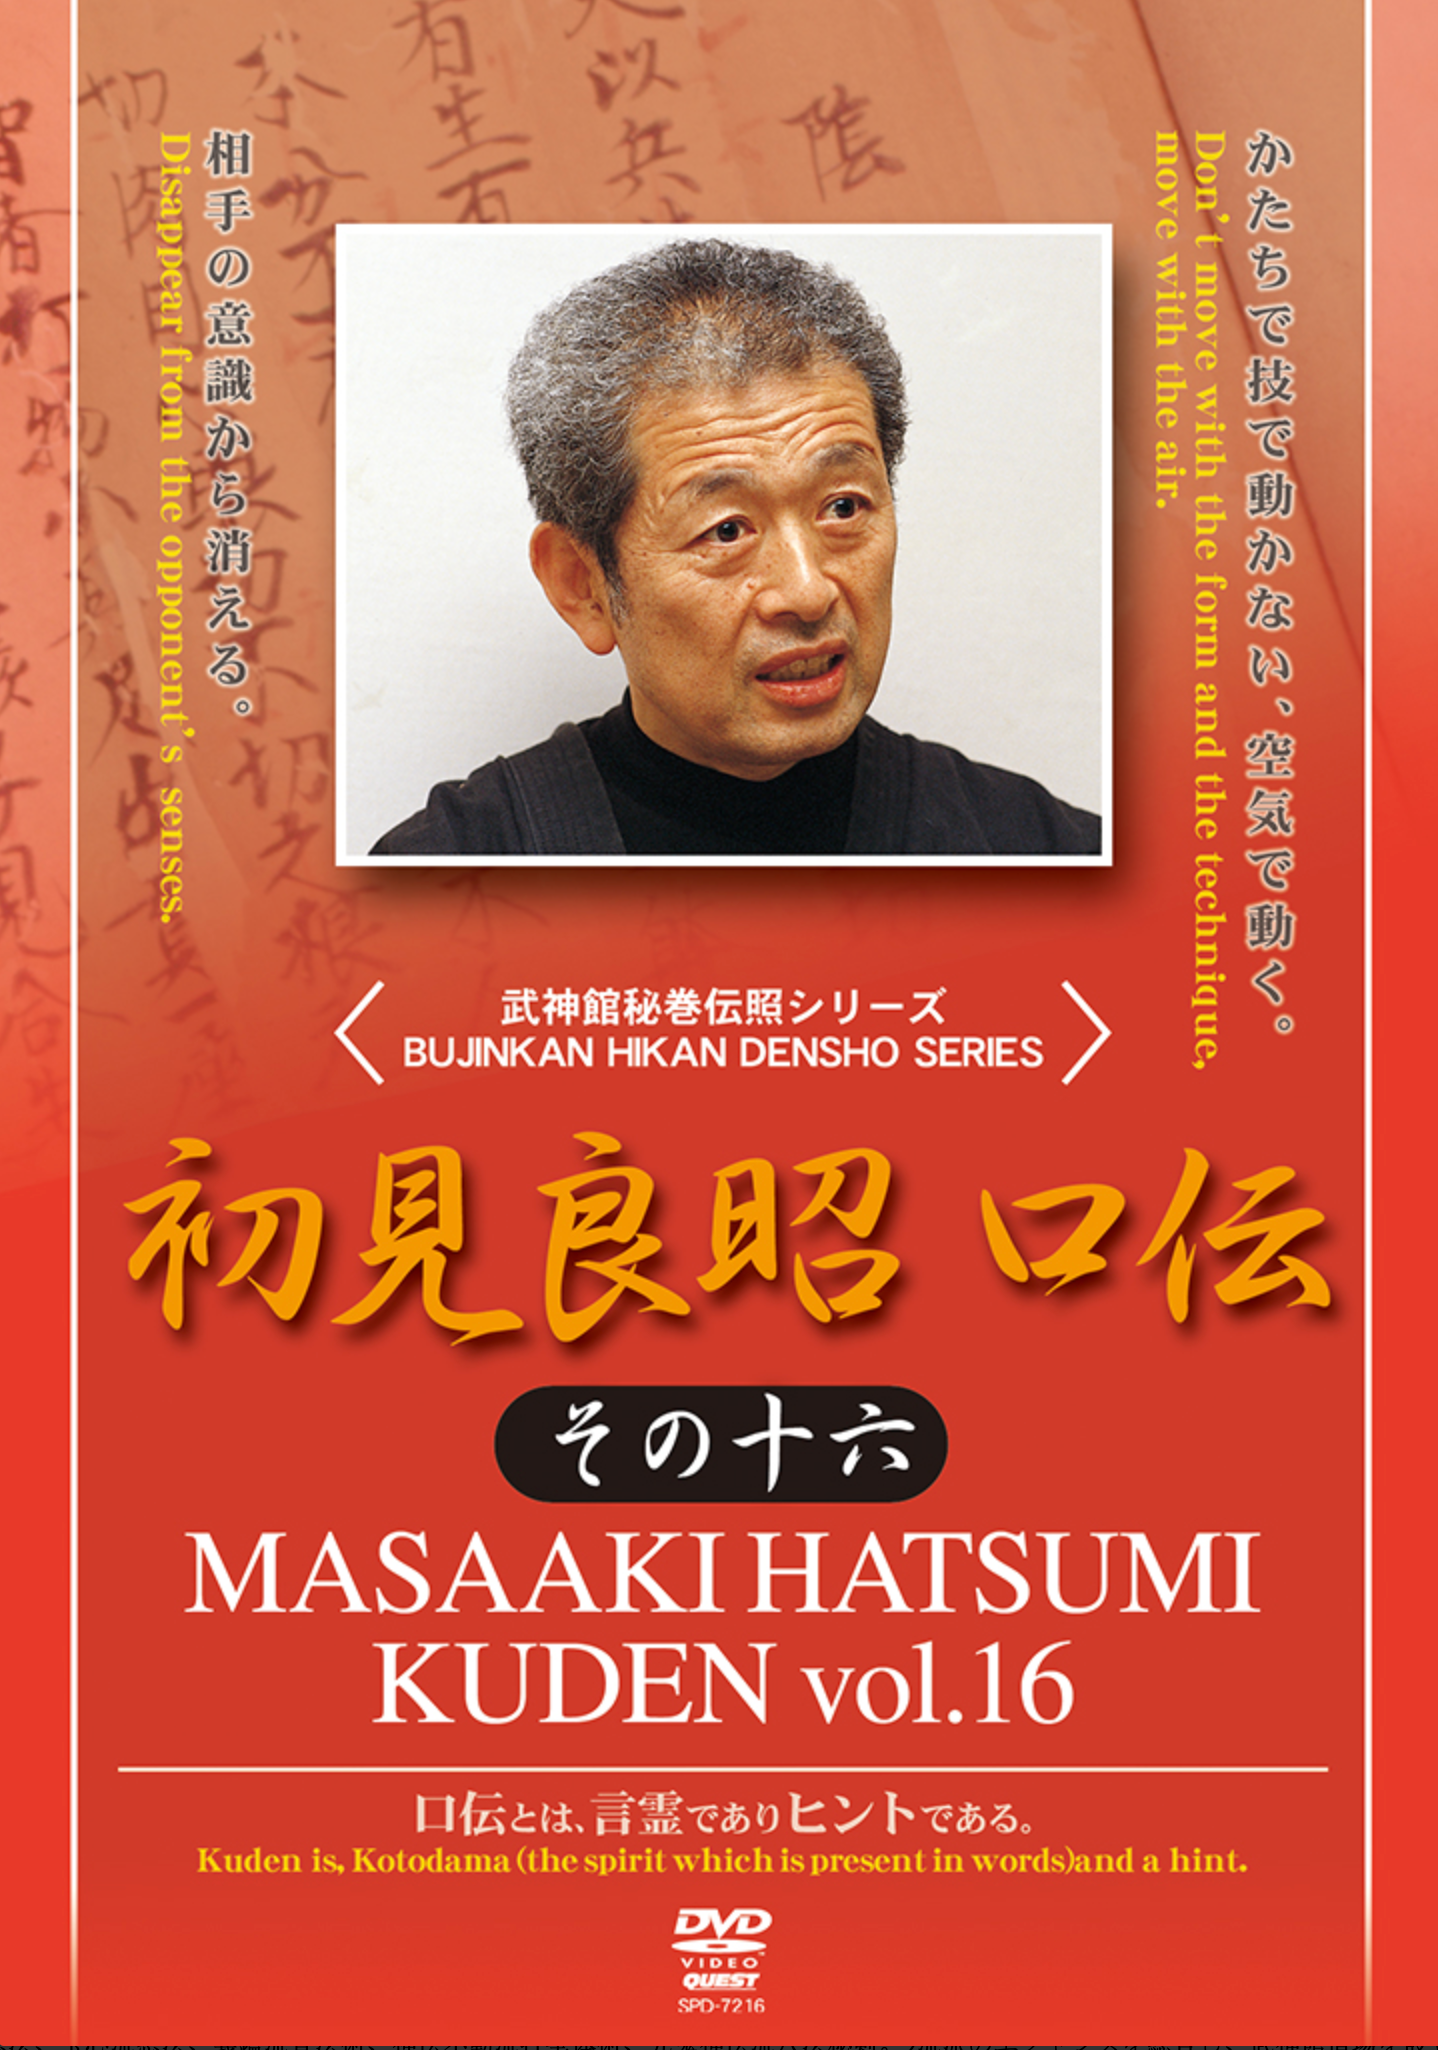 Kuden Vol 16 DVD with Masaaki Hatsumi - Budovideos Inc